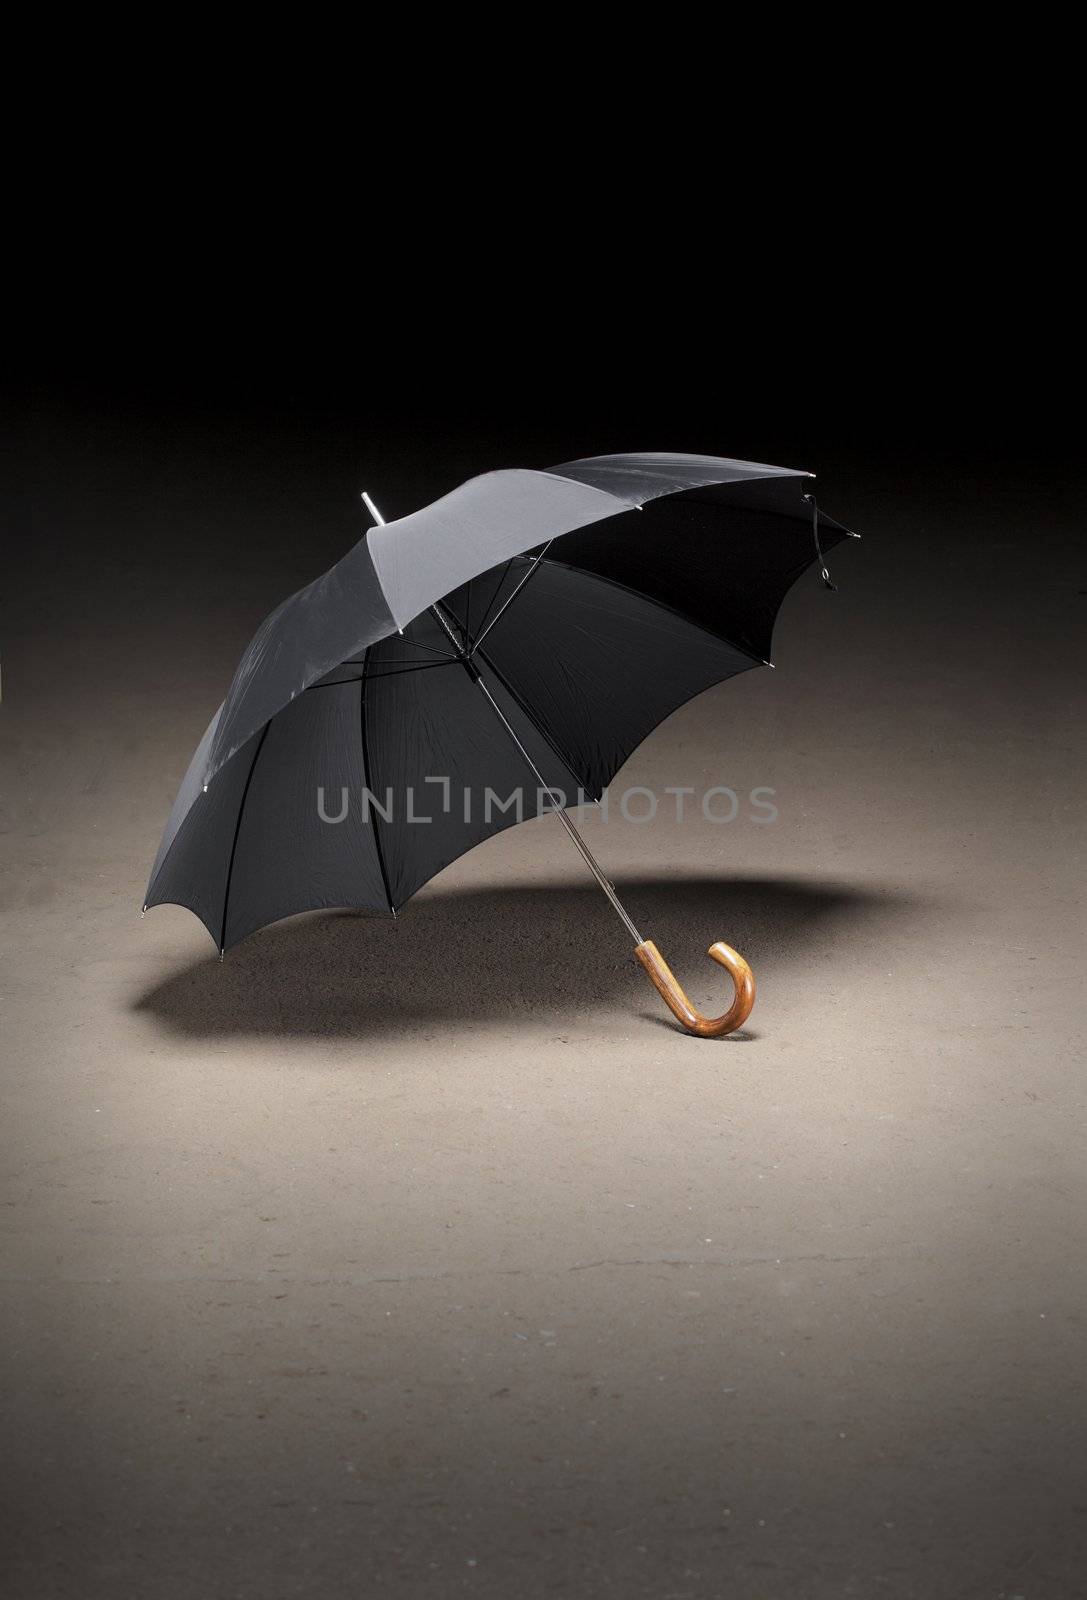 Umbrella by Stocksnapper